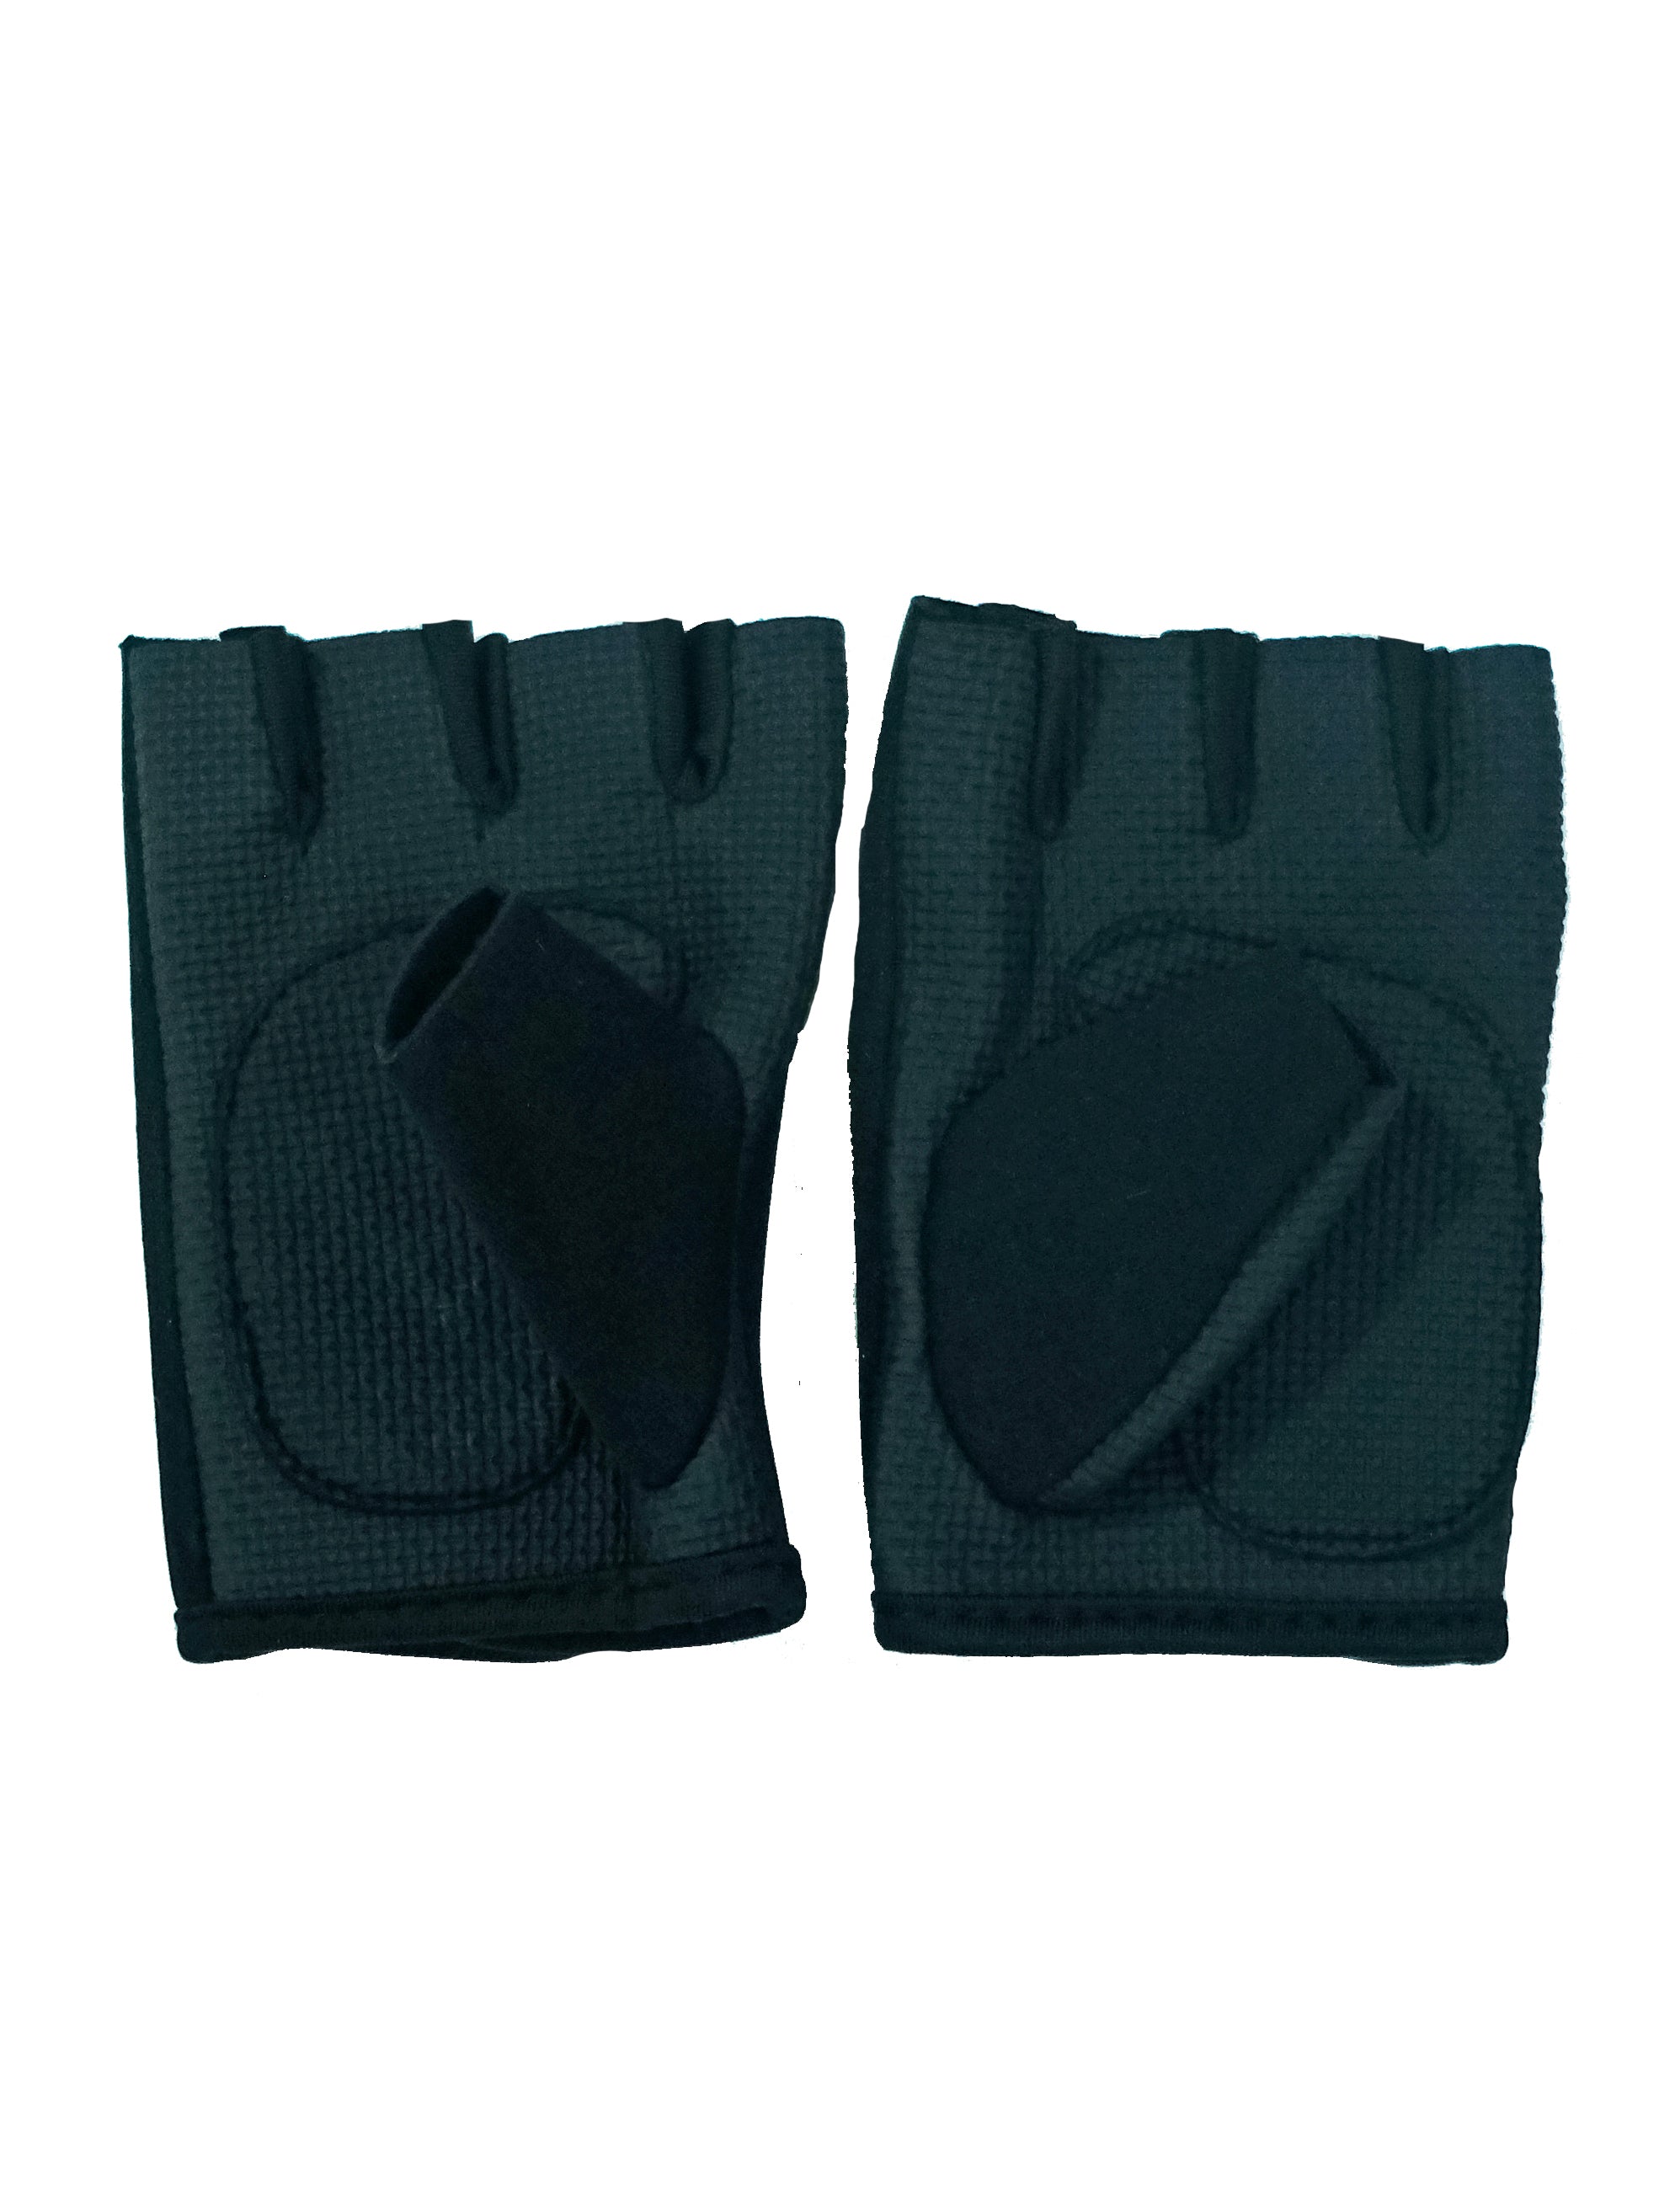 Gym Gloves ver. 2 - Black